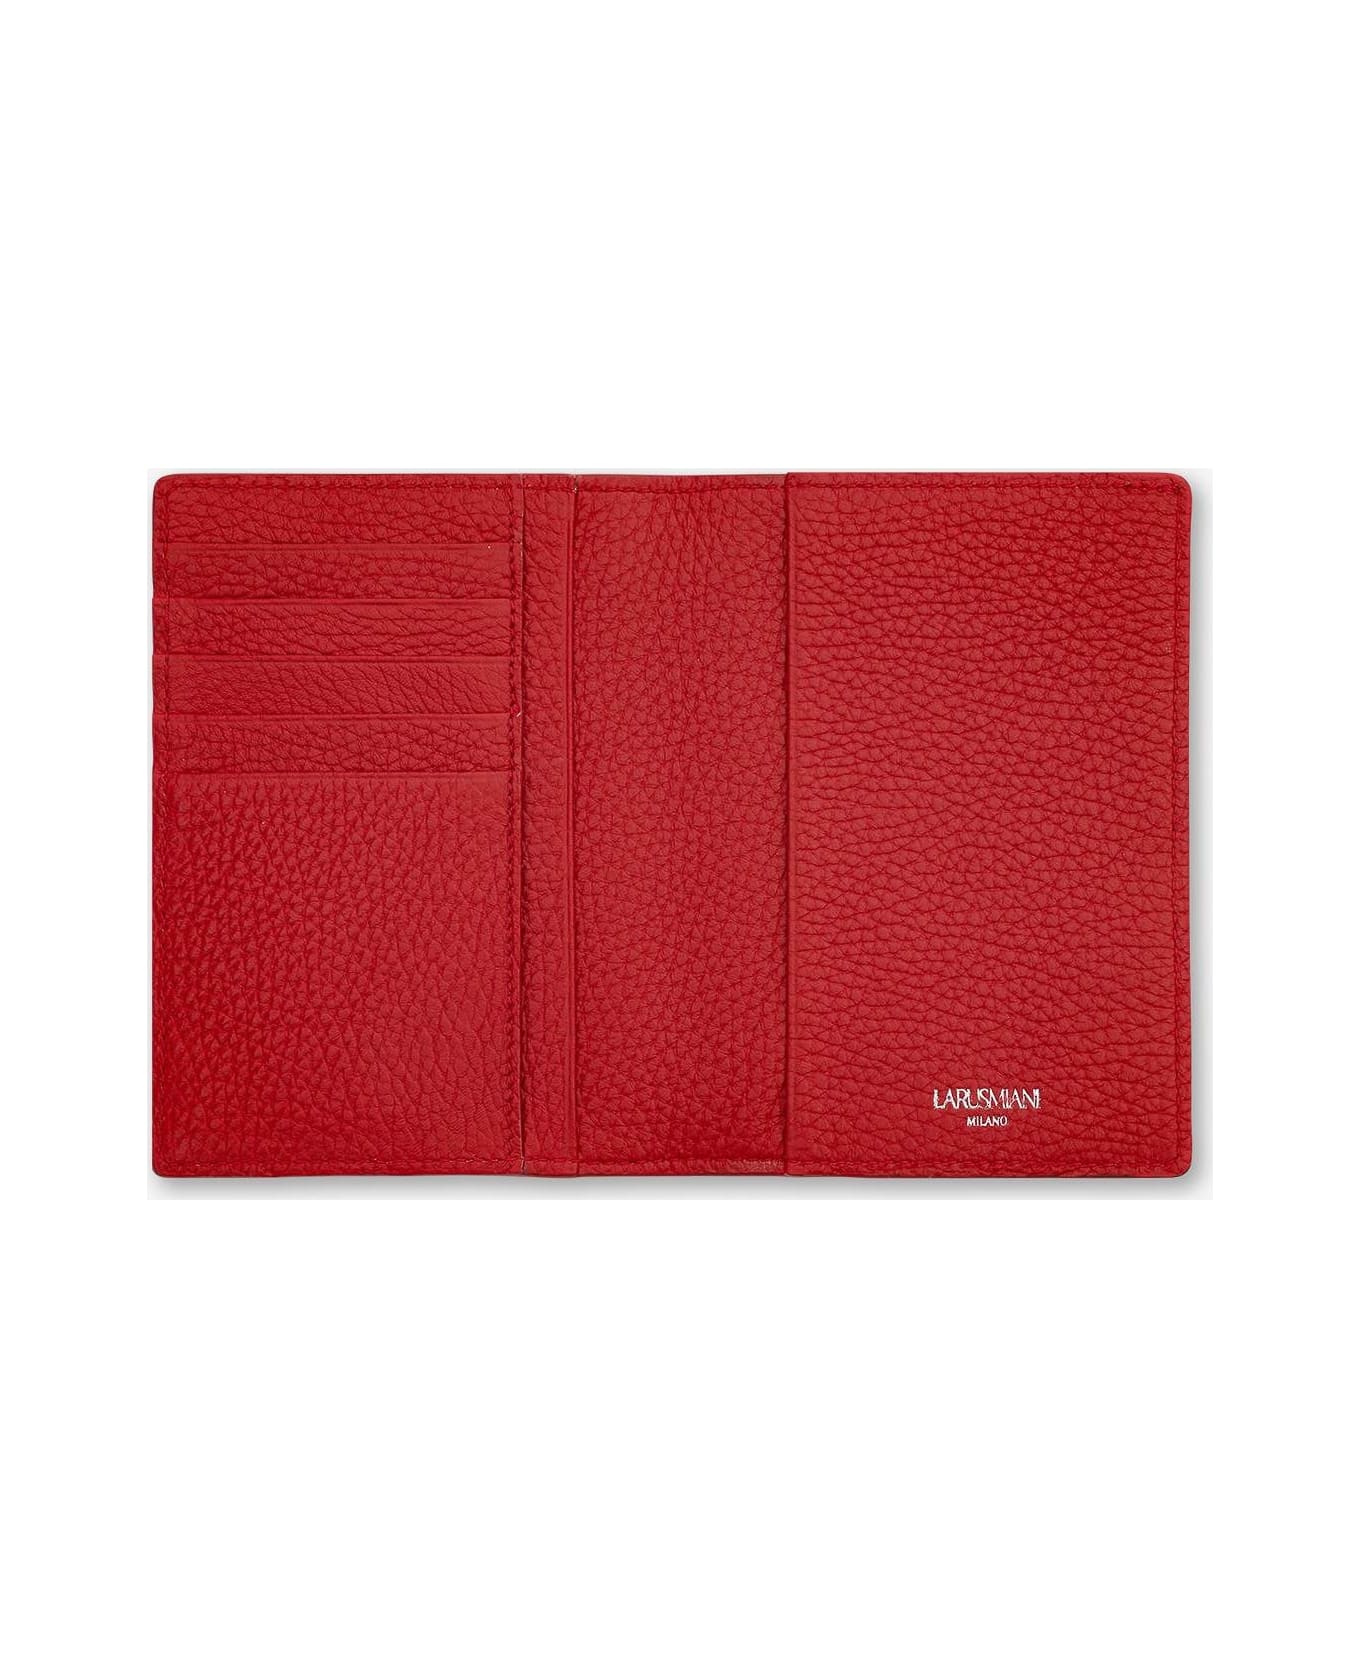 Larusmiani Passport Cover 'fiumicino' Wallet - Red